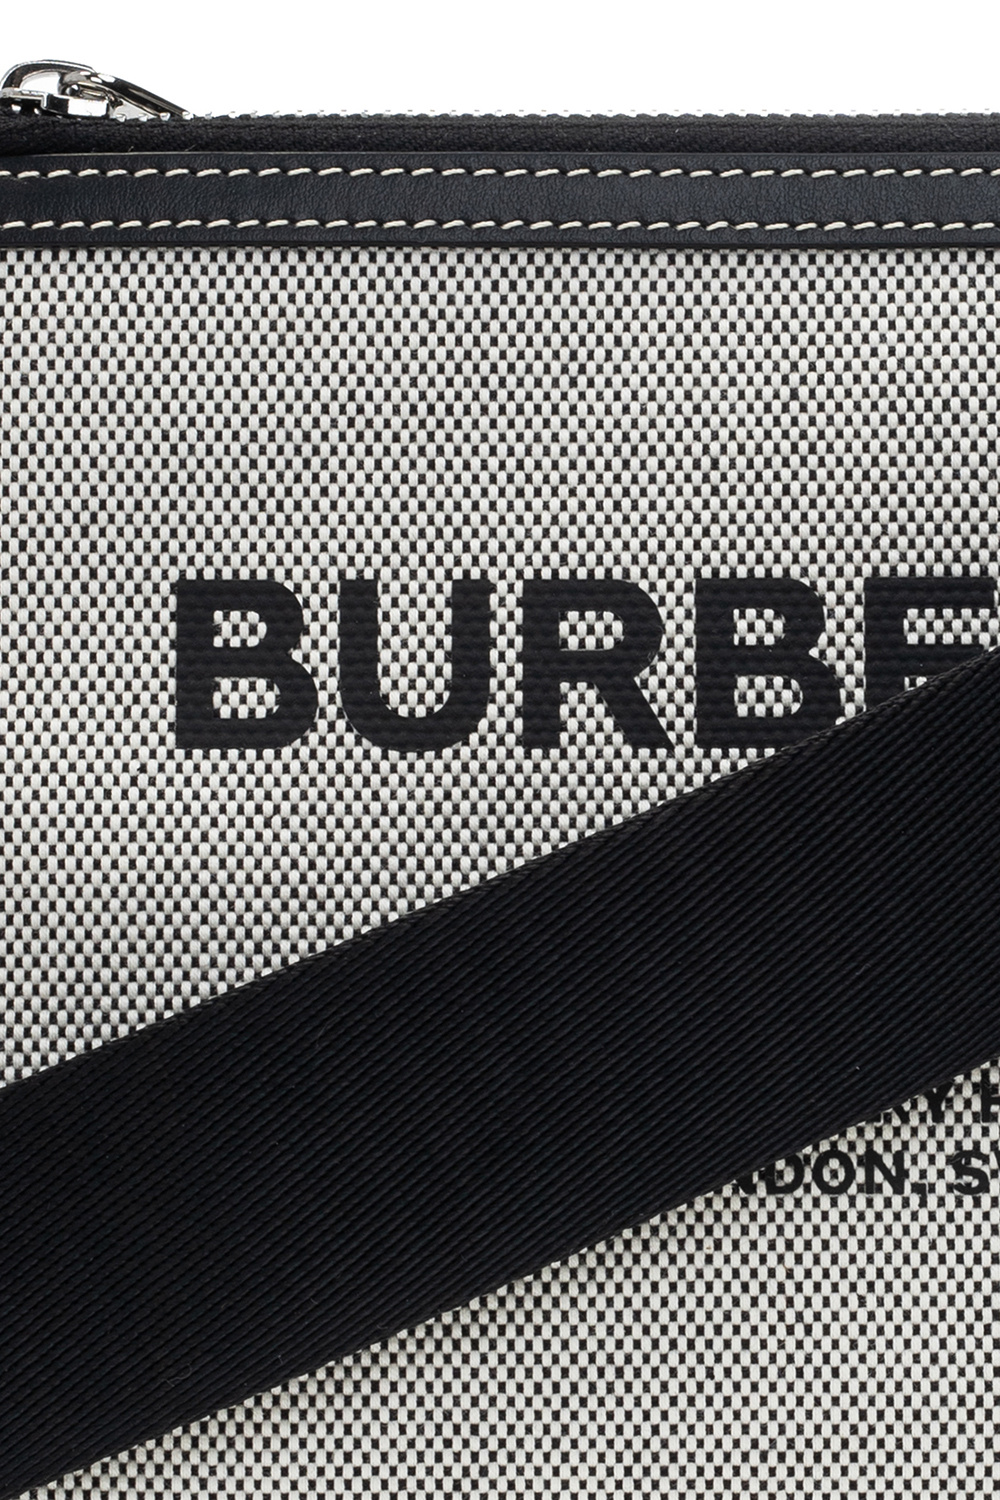 burberry notched Shoulder bag with logo